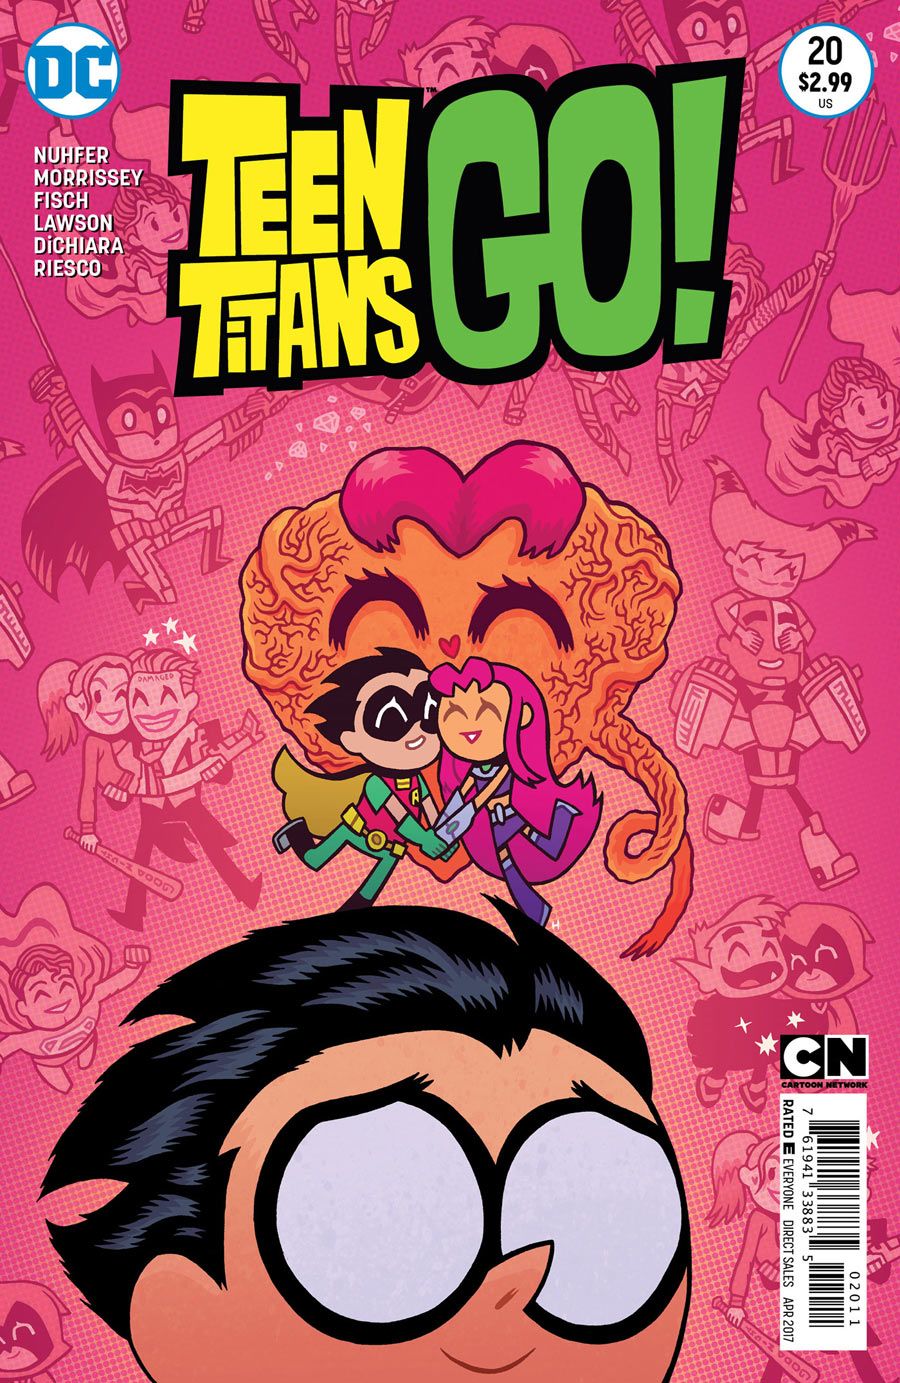 Cartoon Teen Titans send up superheroes, Hollywood in 